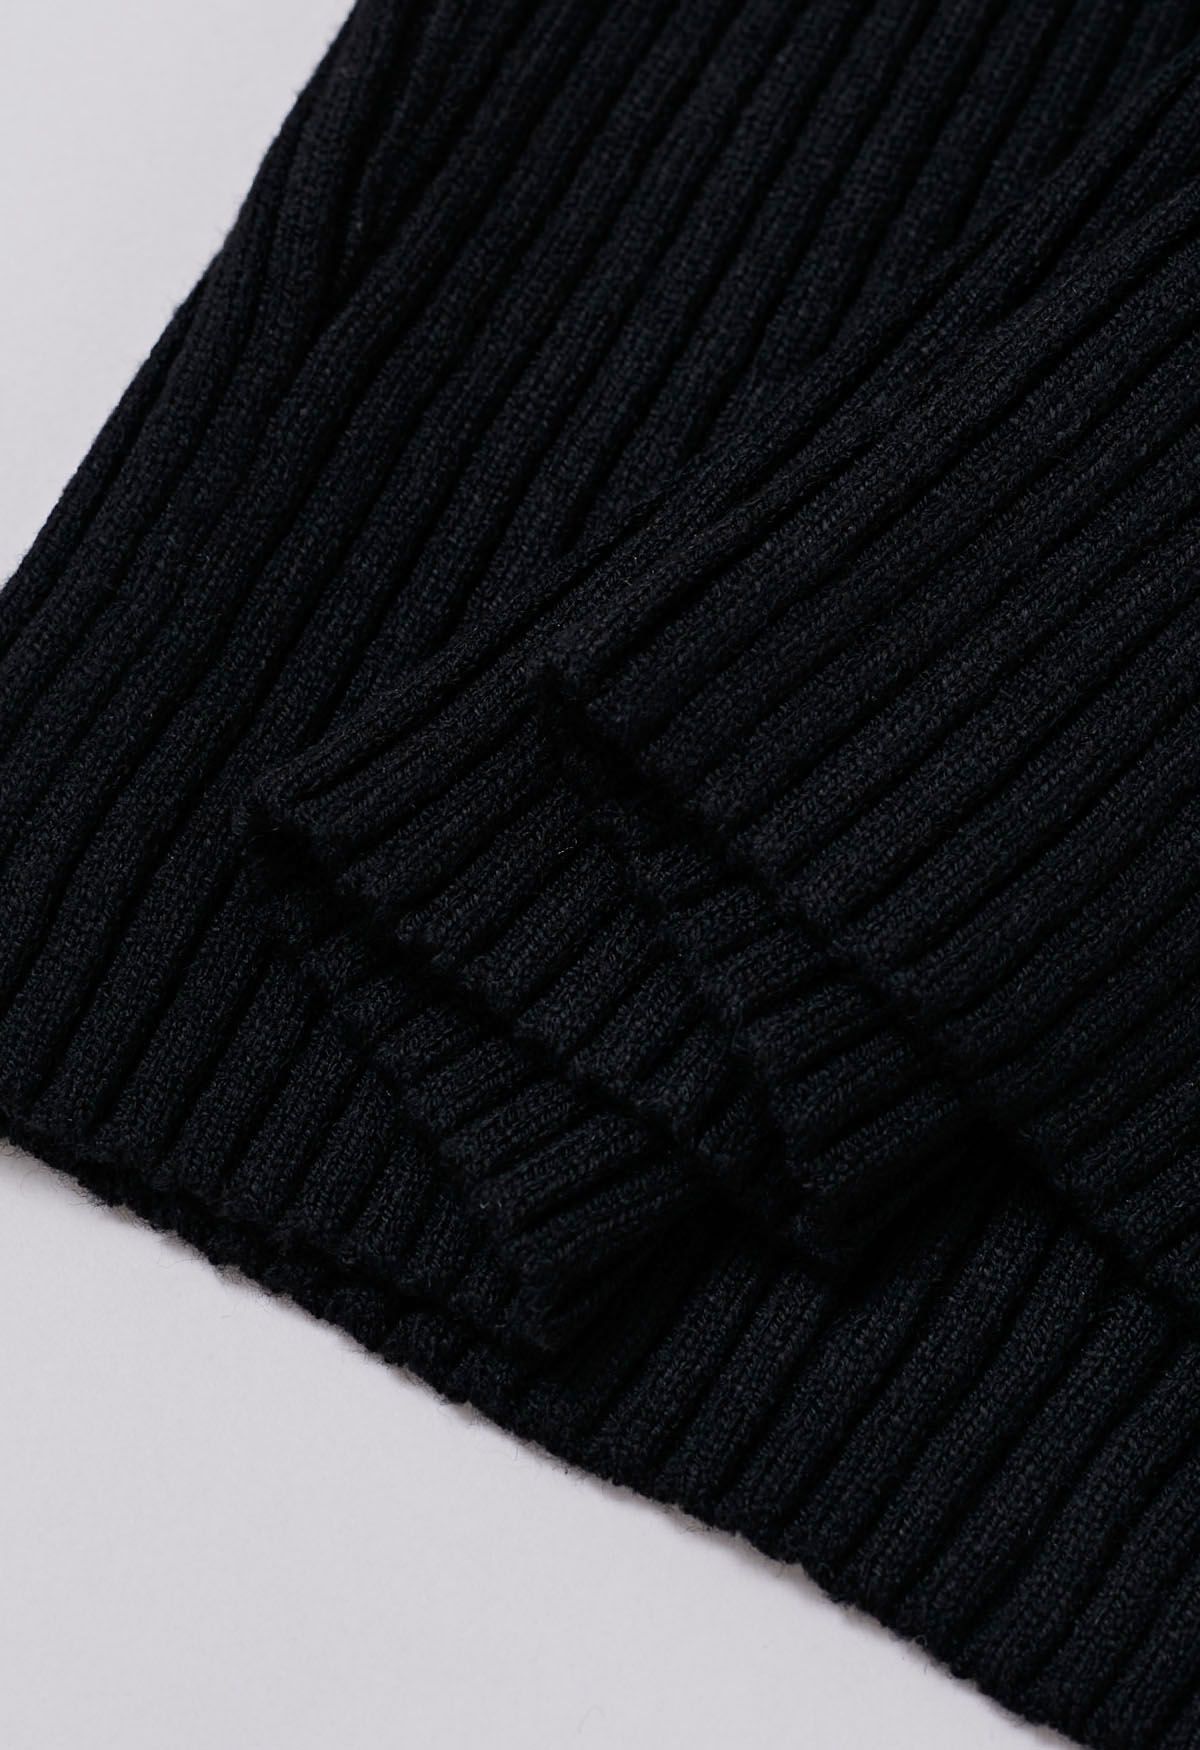 Trendsetting Collared Spliced Knit Top in Black